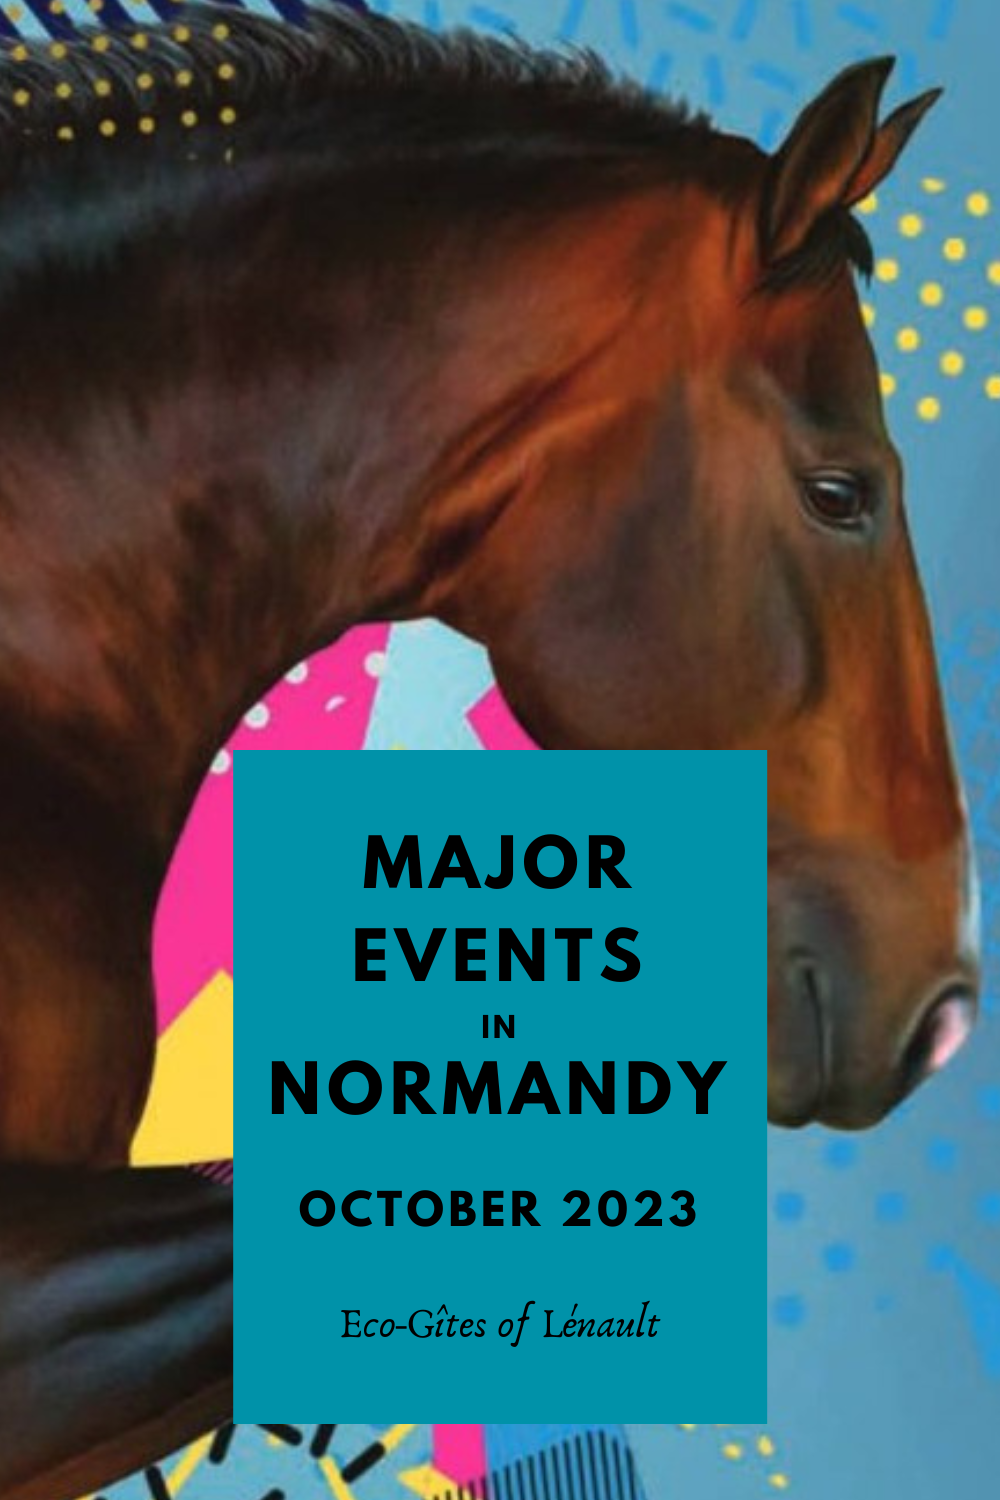 Major events inNormandy in October 2023